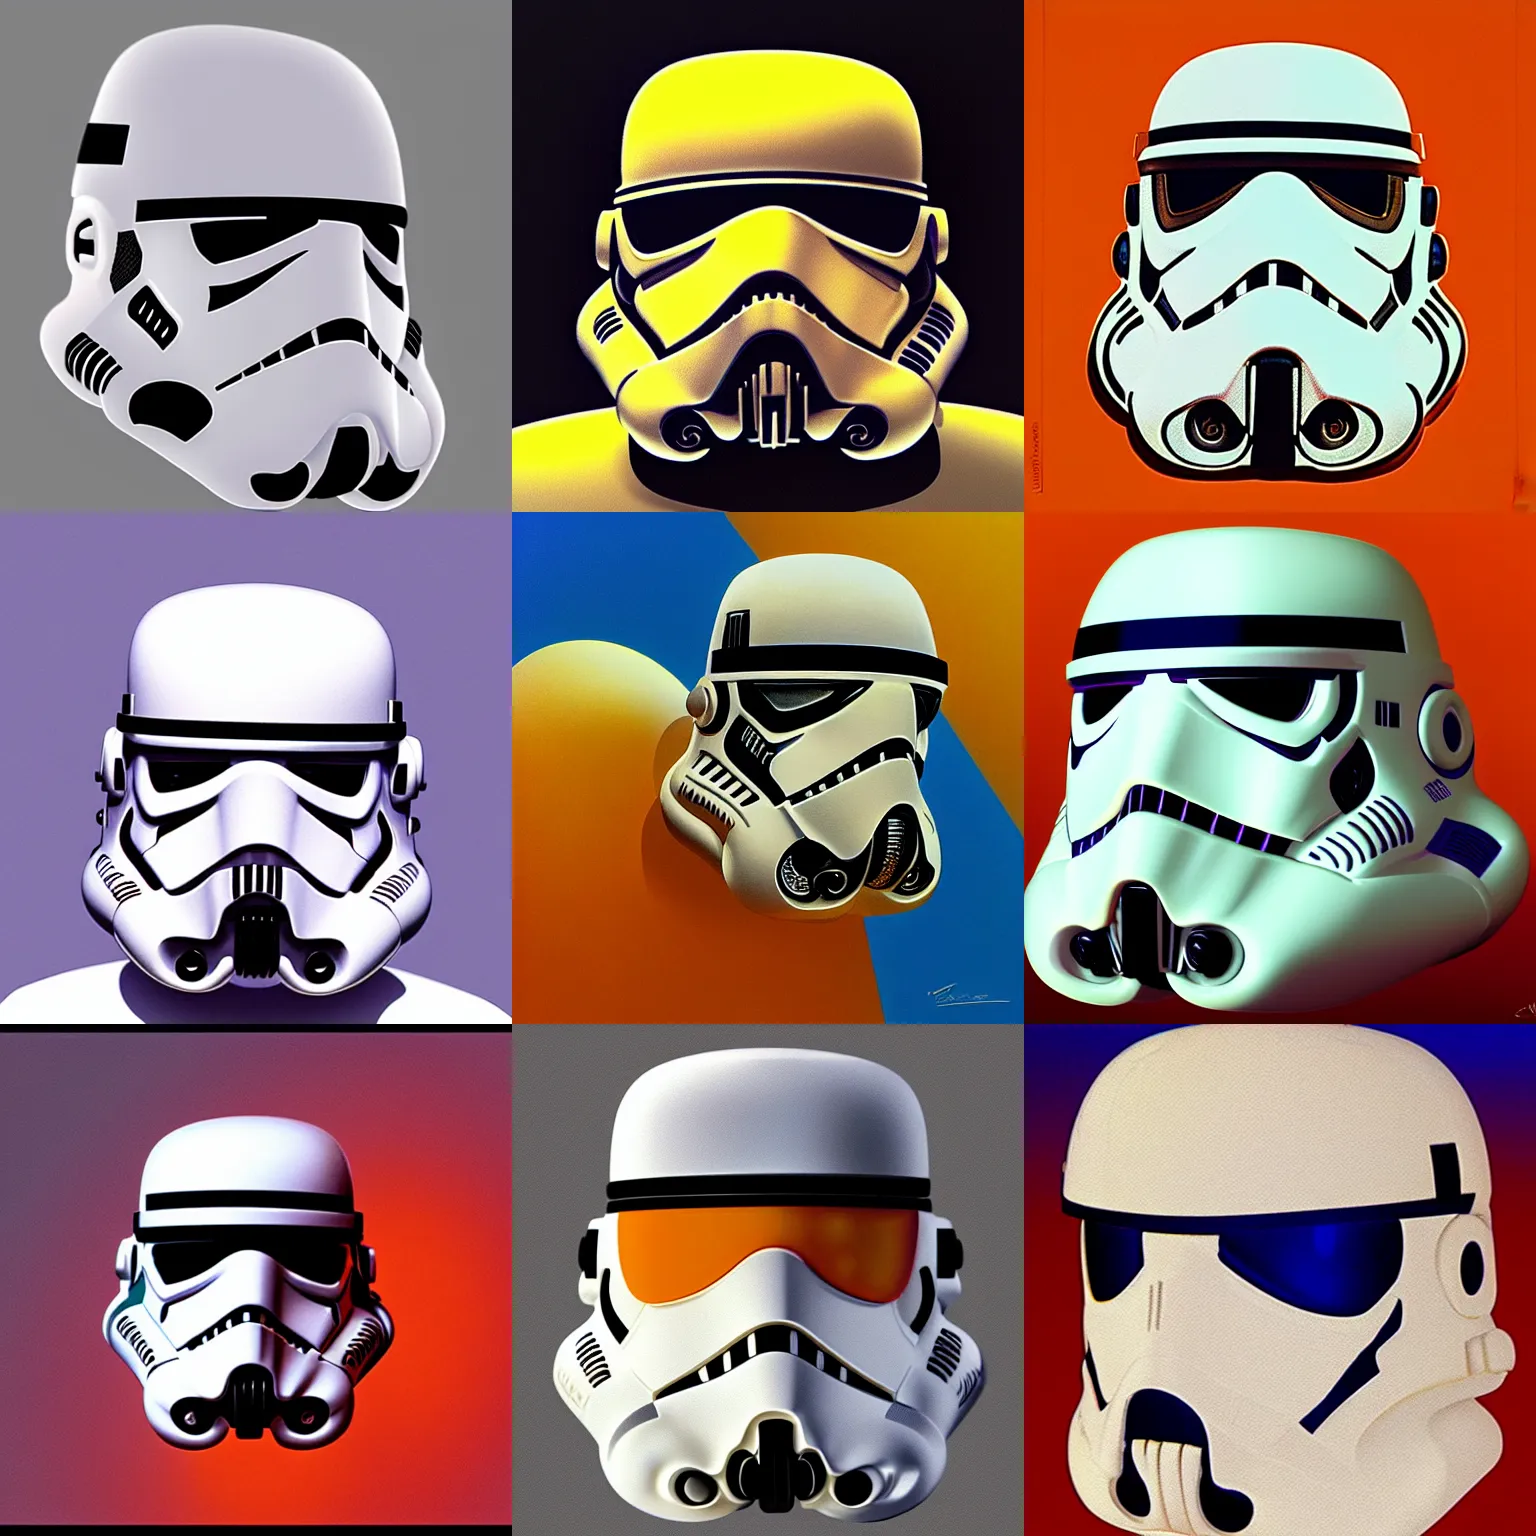 Prompt: Stormtrooper helmet by René Laloux, Jean Giraud, Mœbius, Moebius, orange, yellow, saturated, high quality scan, 8k, artstationhq, IAMAG